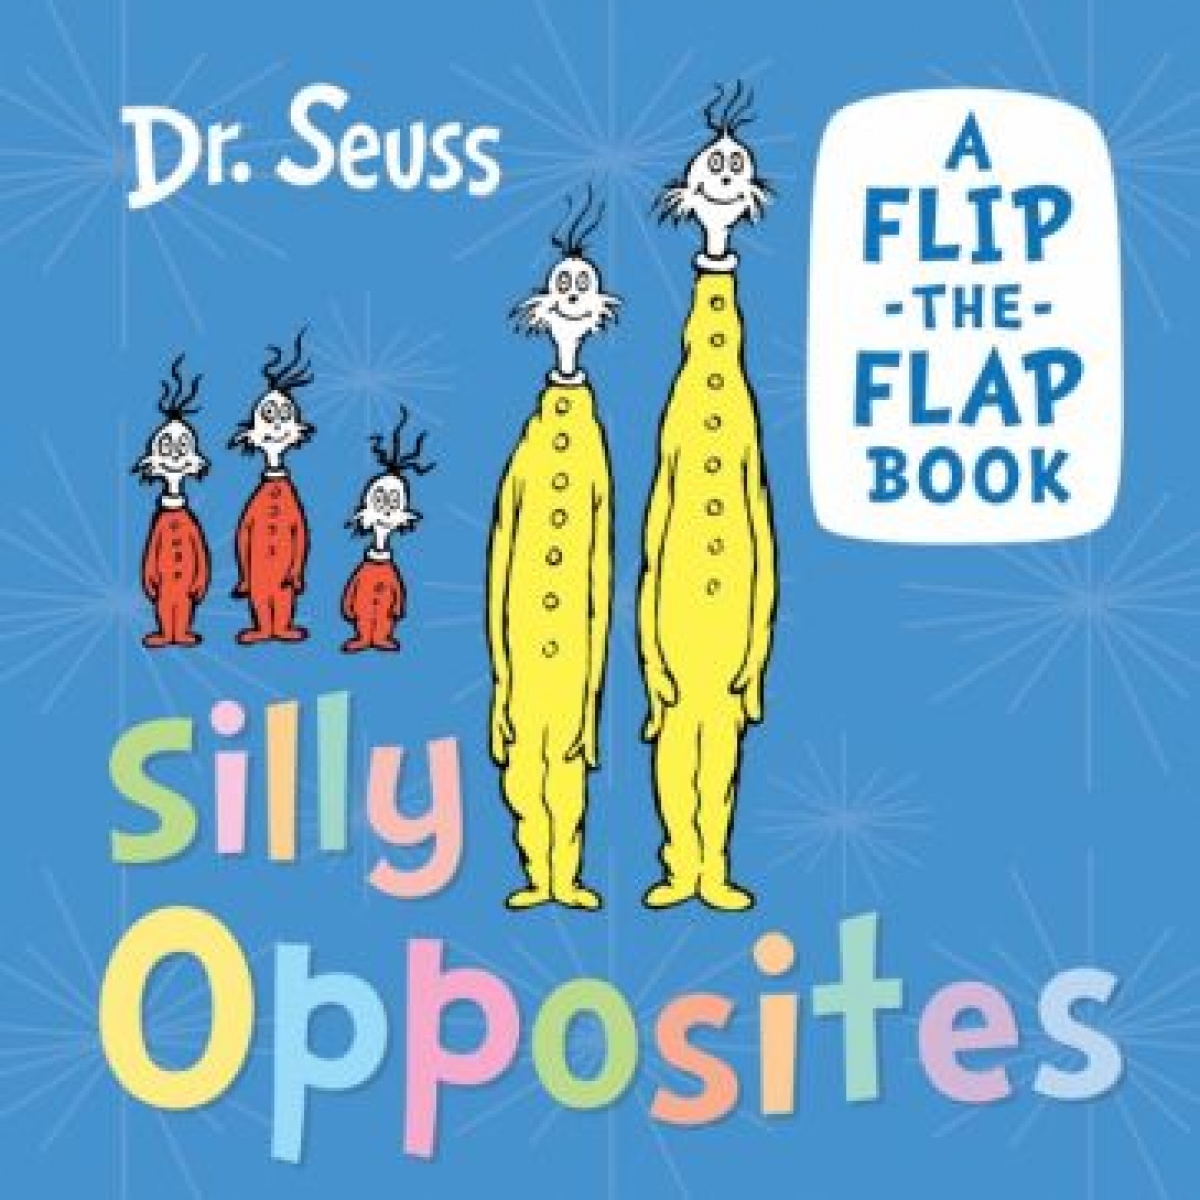 Dr Seuss Silly Opposites. A Flip-the-Flap Book 